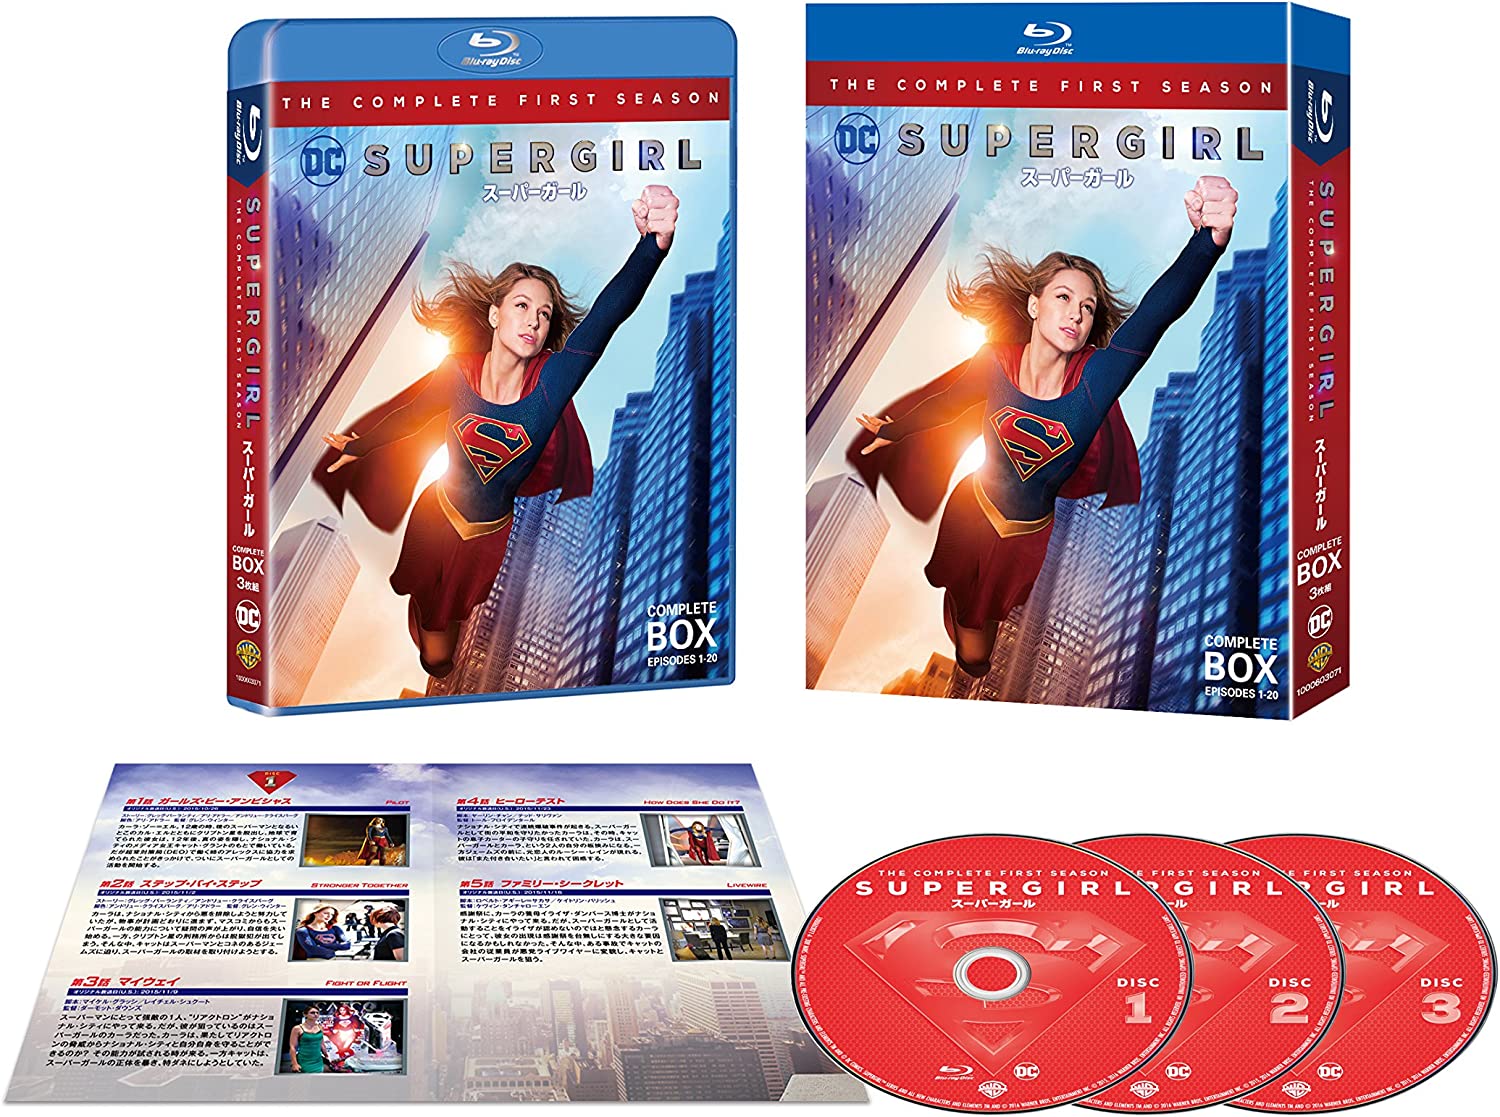 SUPERGIRL/スーパーガール 〈ファースト・シーズン〉 コンプリート・ボックス(3枚組) [Blu-ray]